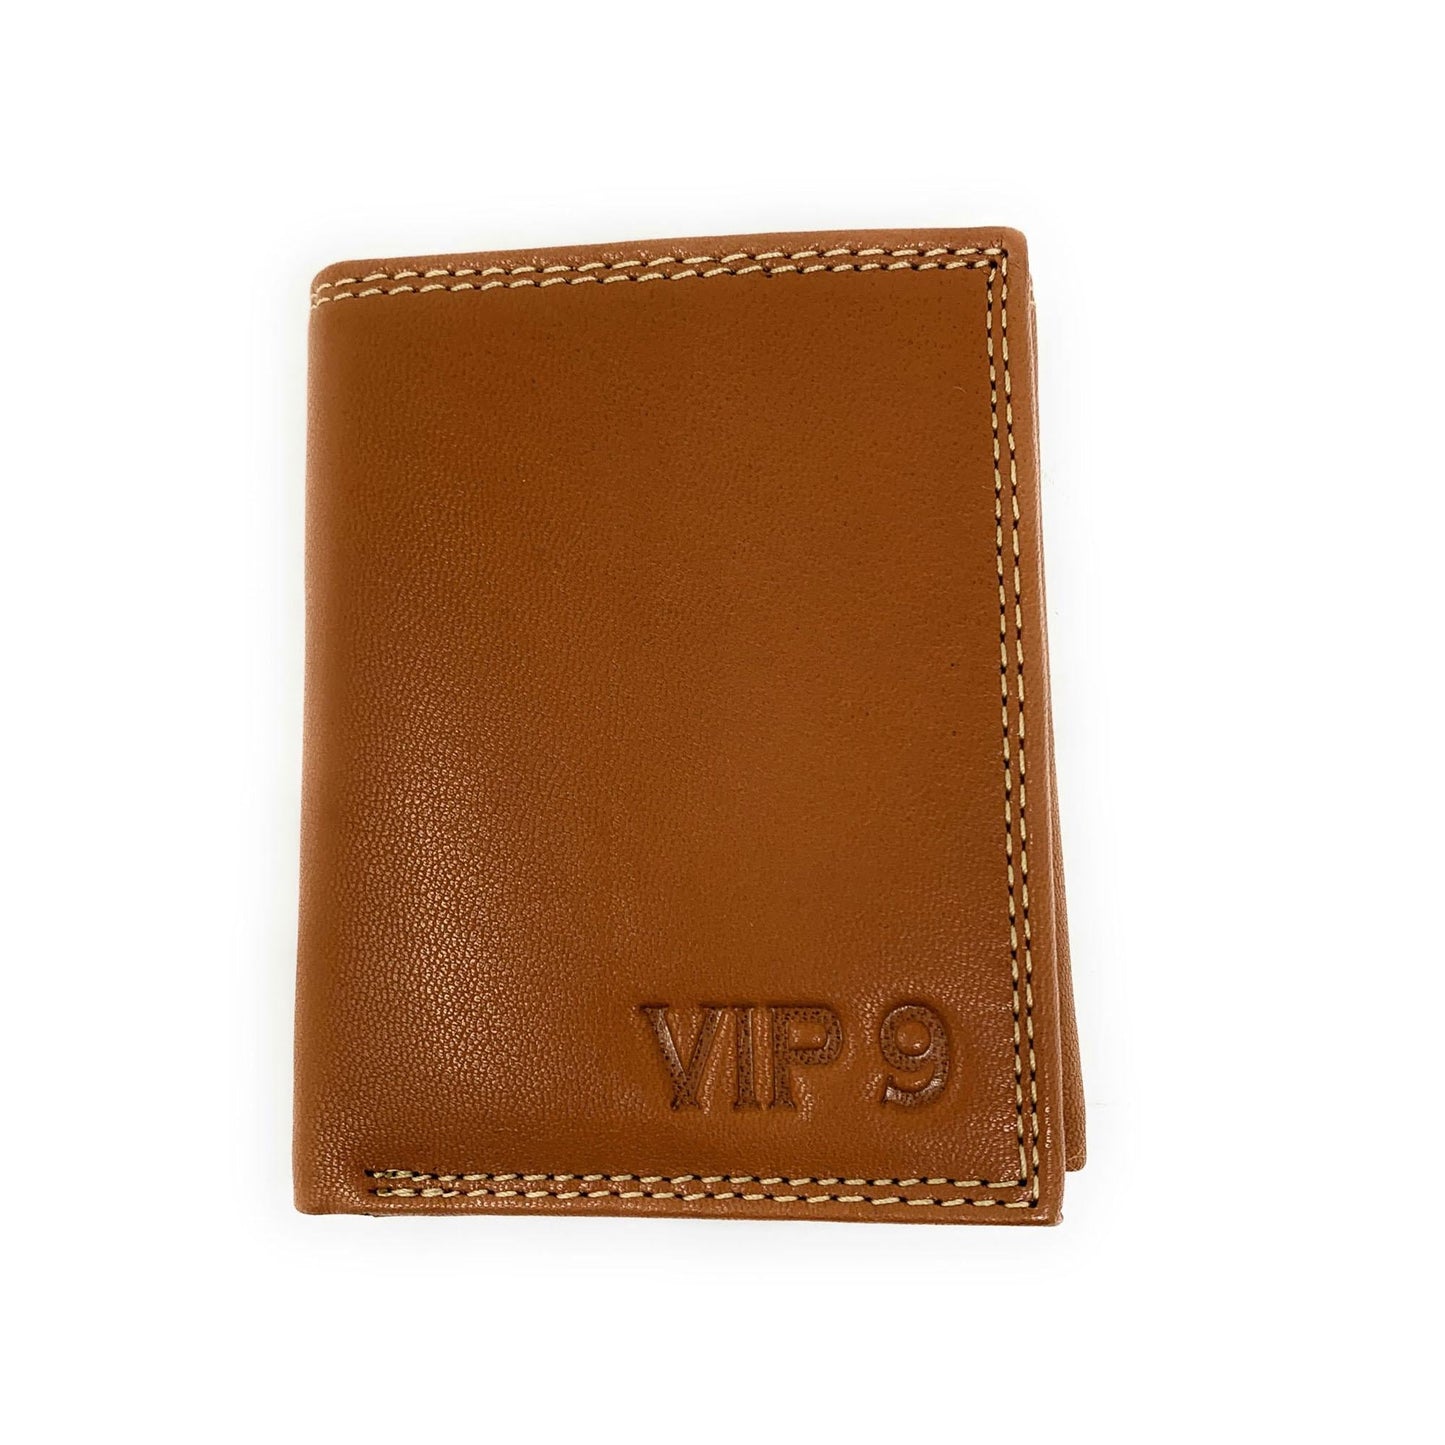 Empire Cove VIP Classic Genuine Leather Slim Trifold Wallets Cash Card ID Slots-Wallets-Empire Cove-Black-Casaba Shop